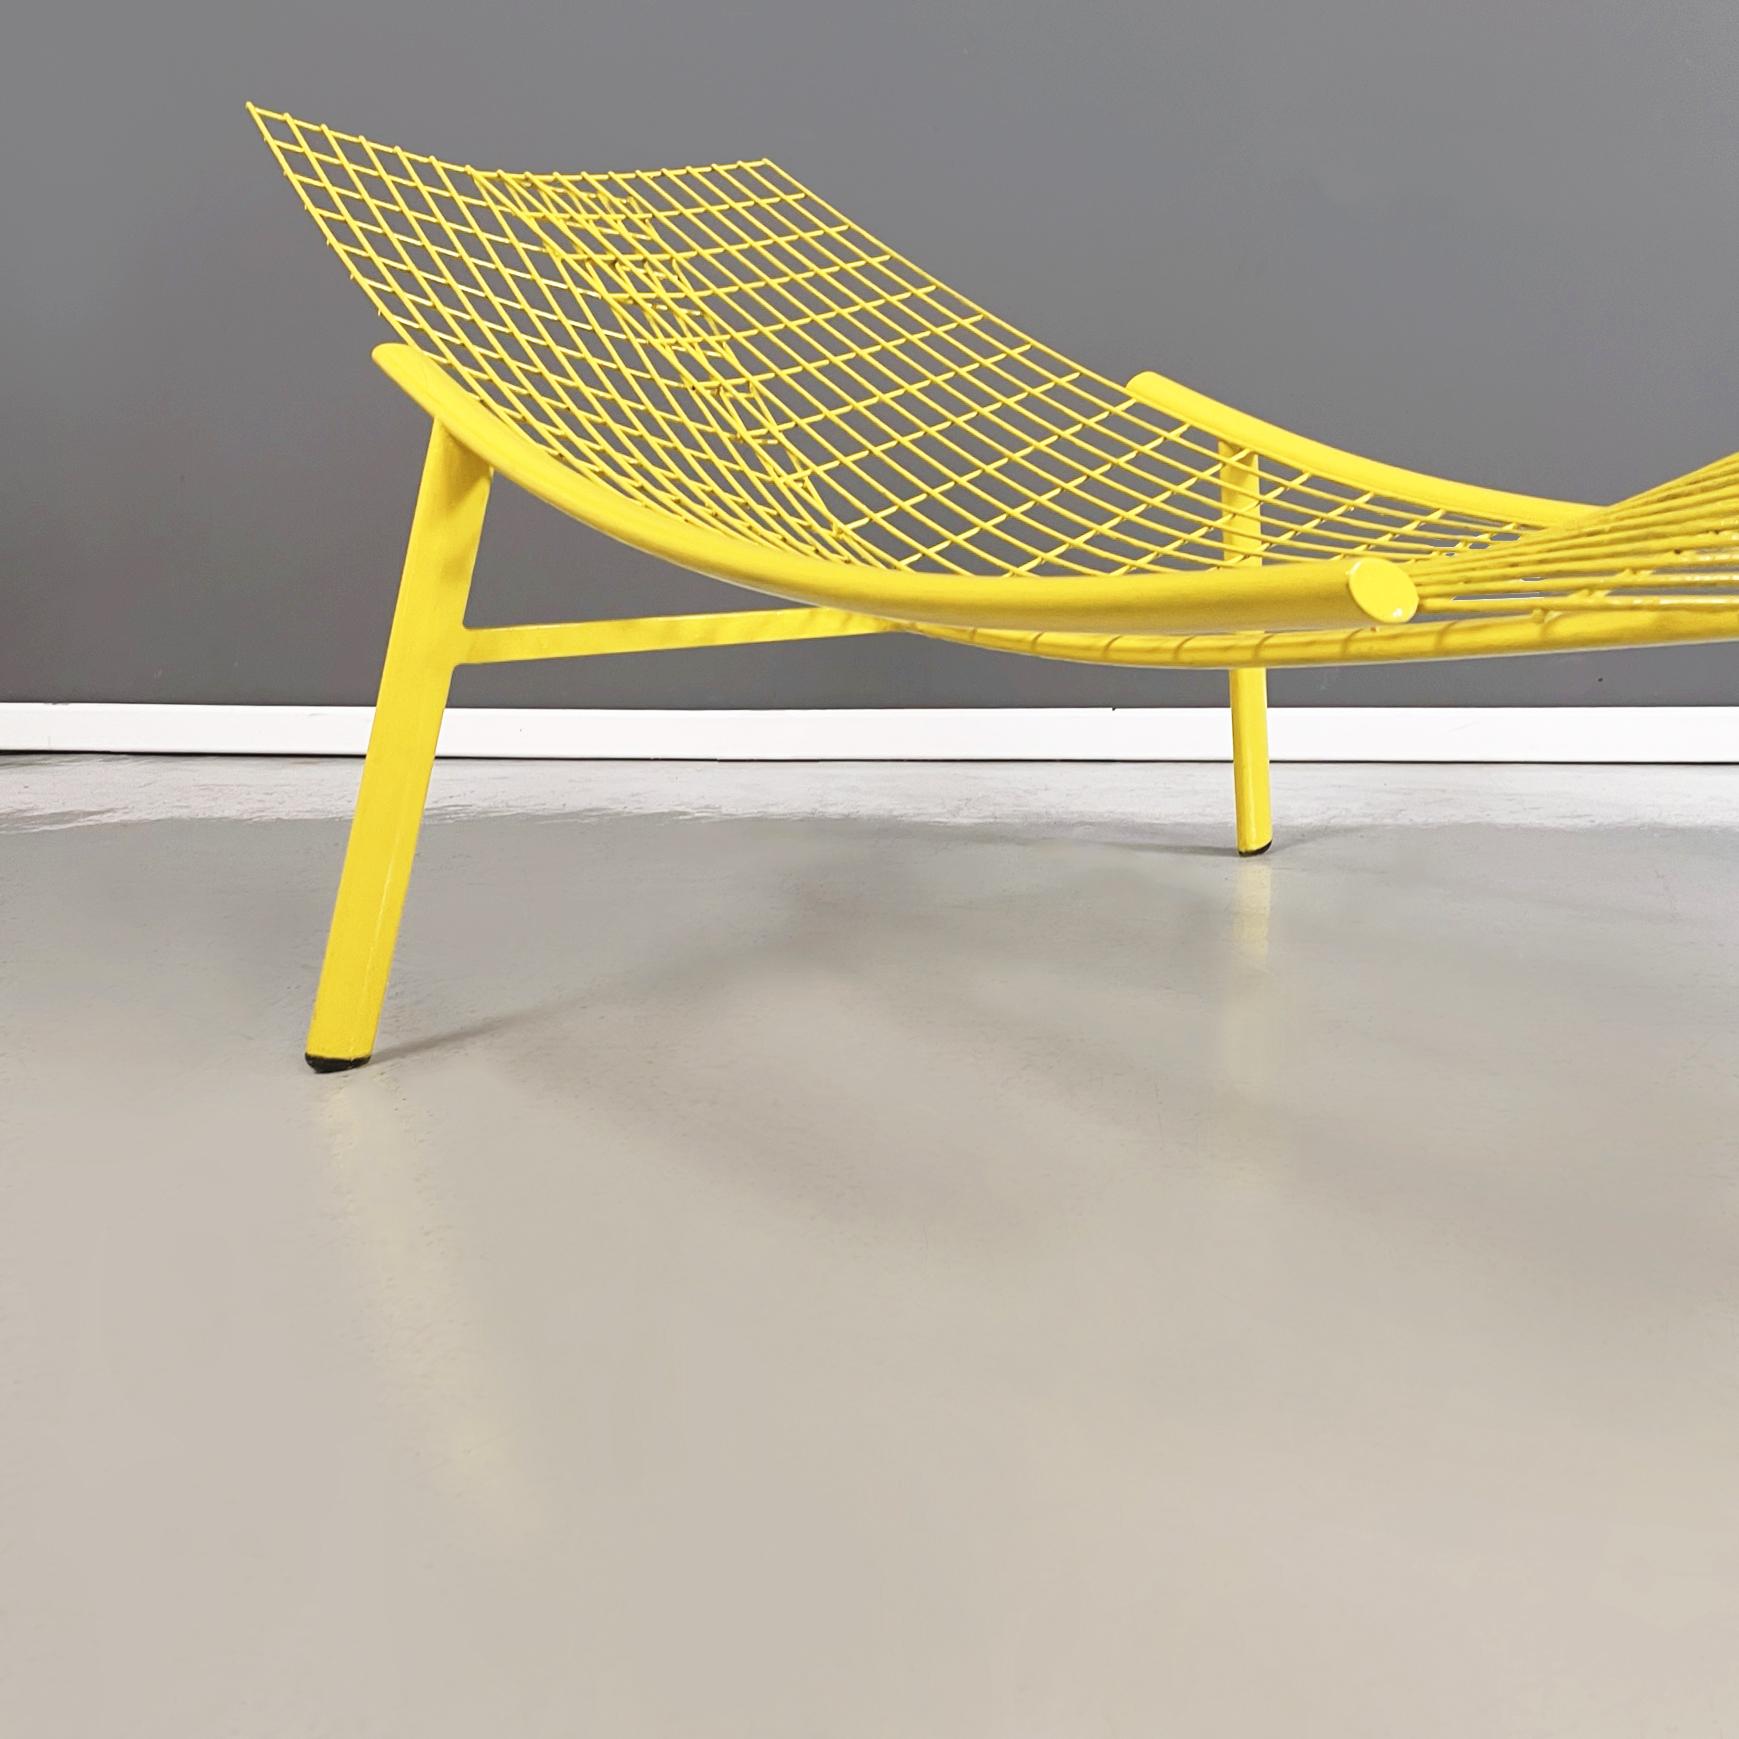 Metal Italian modern Yellow metal Deck chair Swing Rete by Offredi for Saporiti, 1980s For Sale